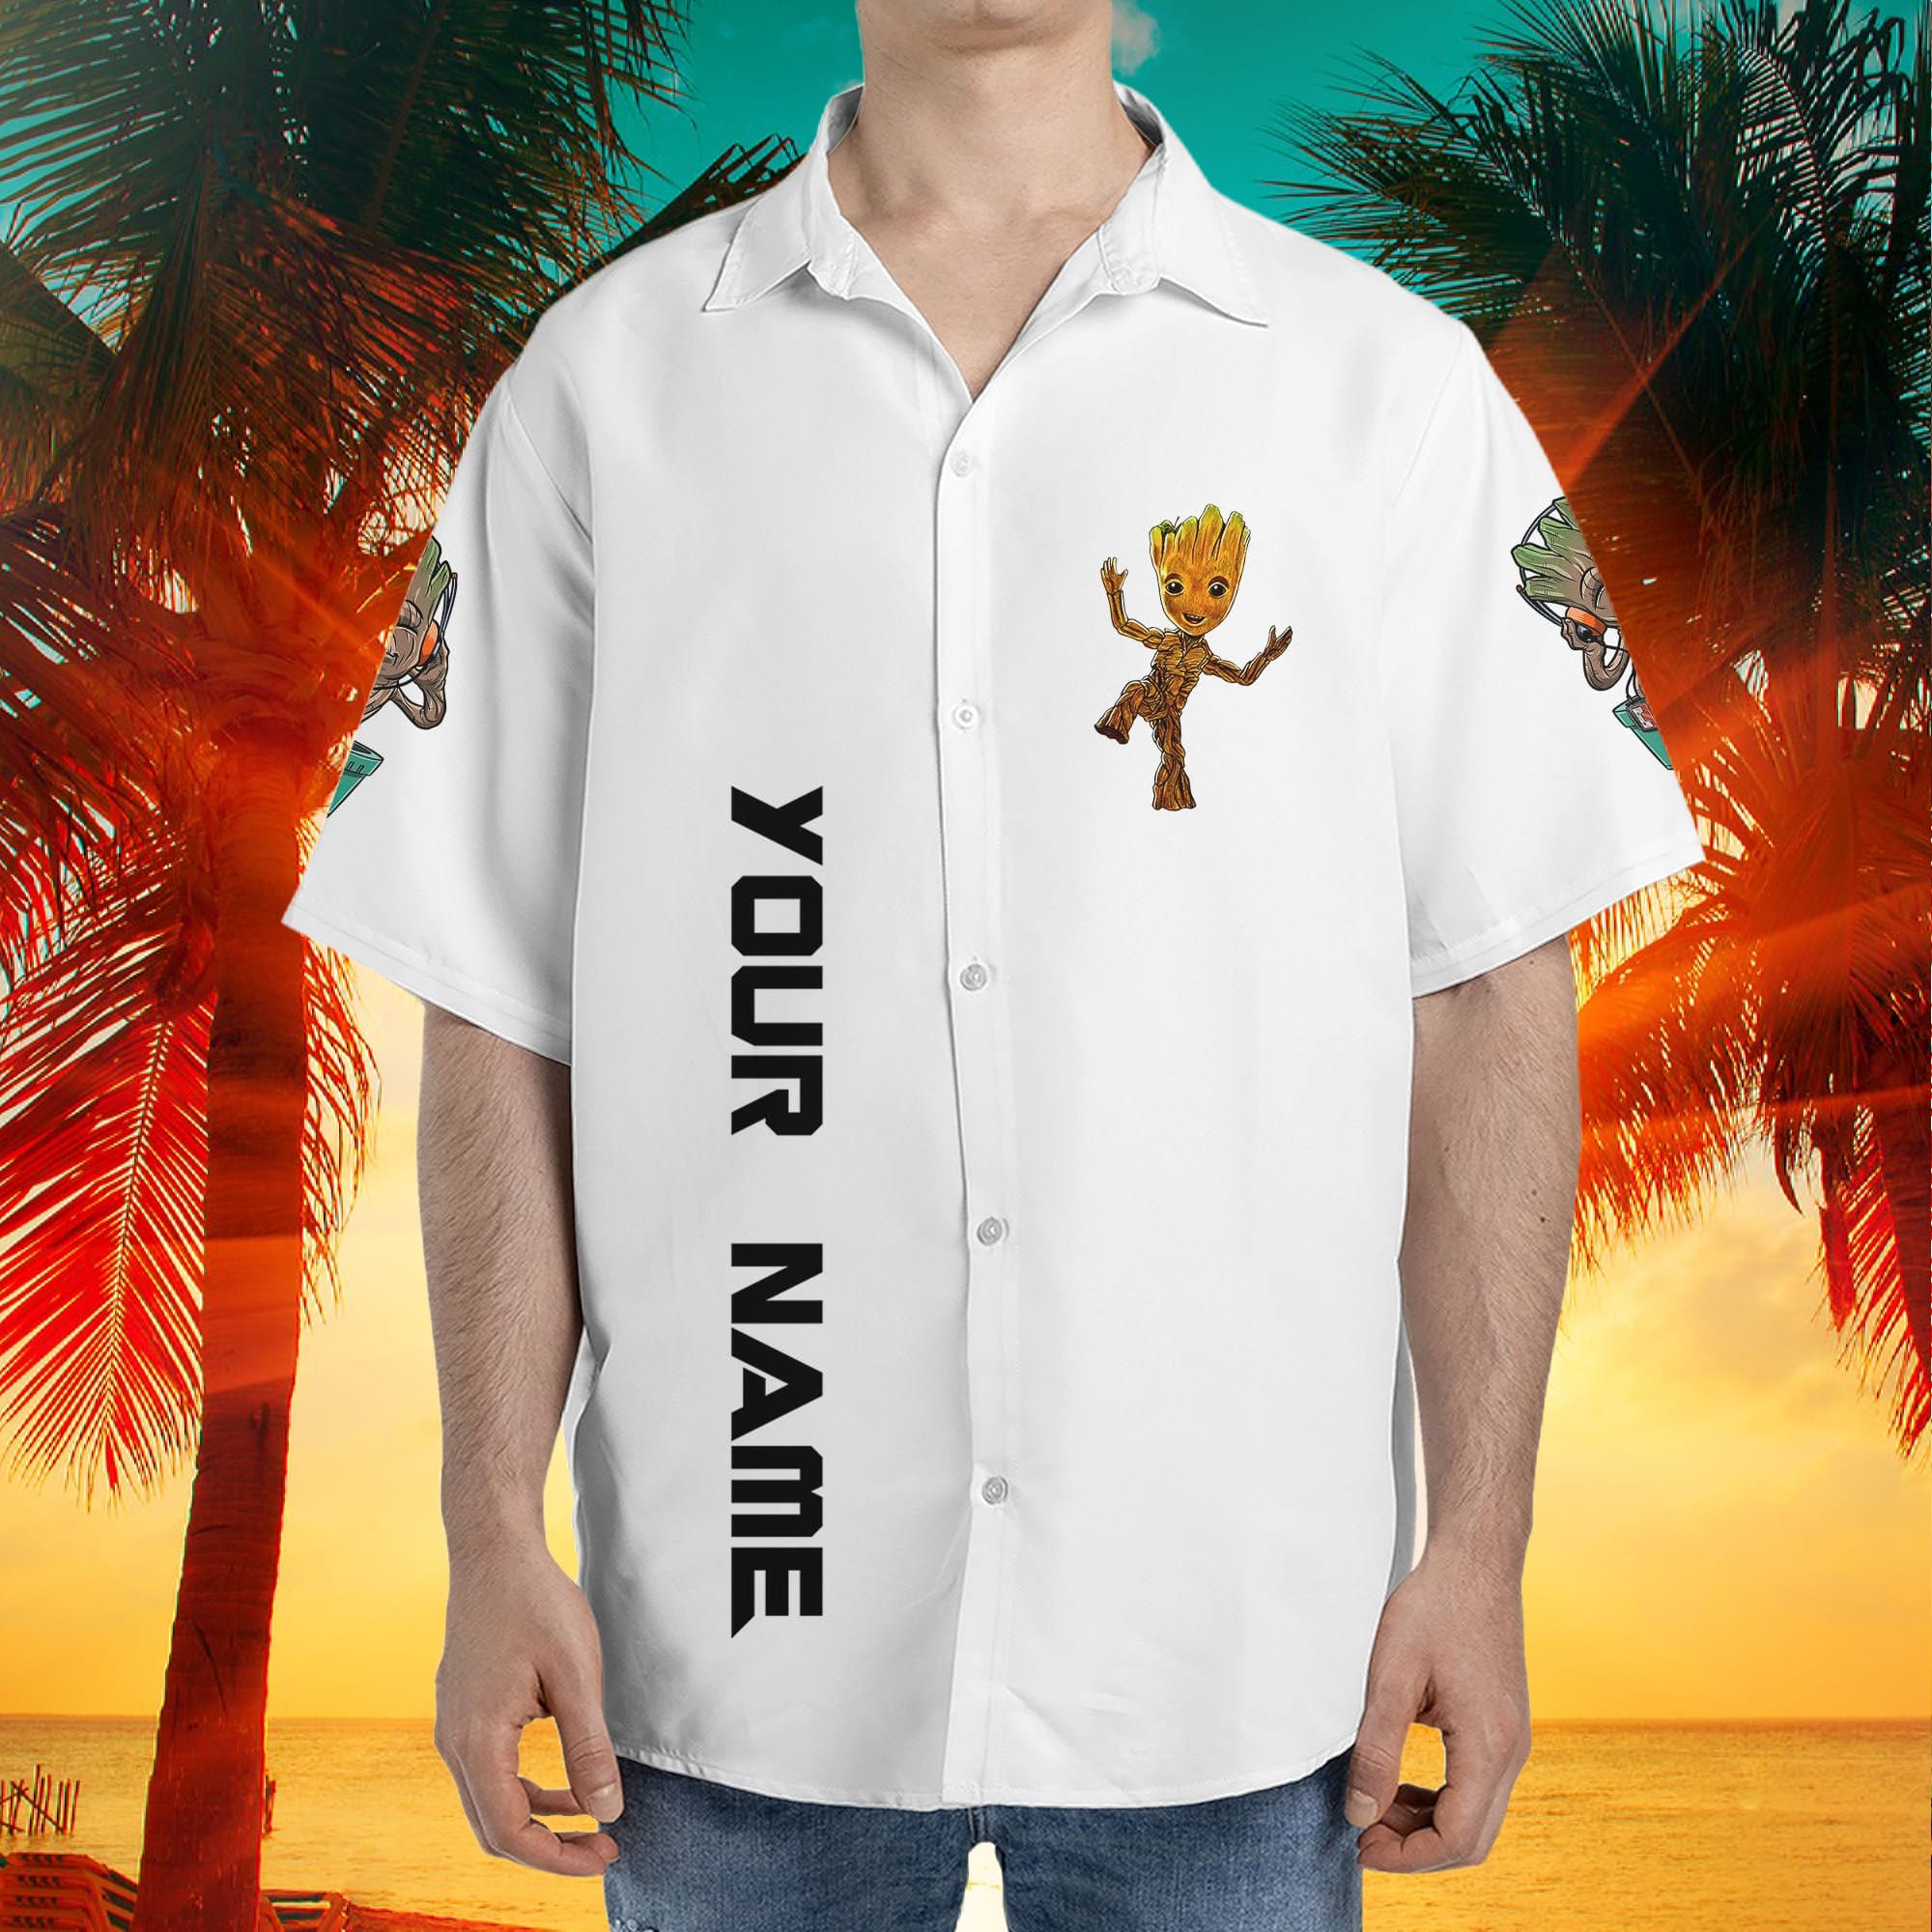 Chicago Cubs MLB Custom Name Cheap Button Up Hawaiian Shirt - T-shirts Low  Price